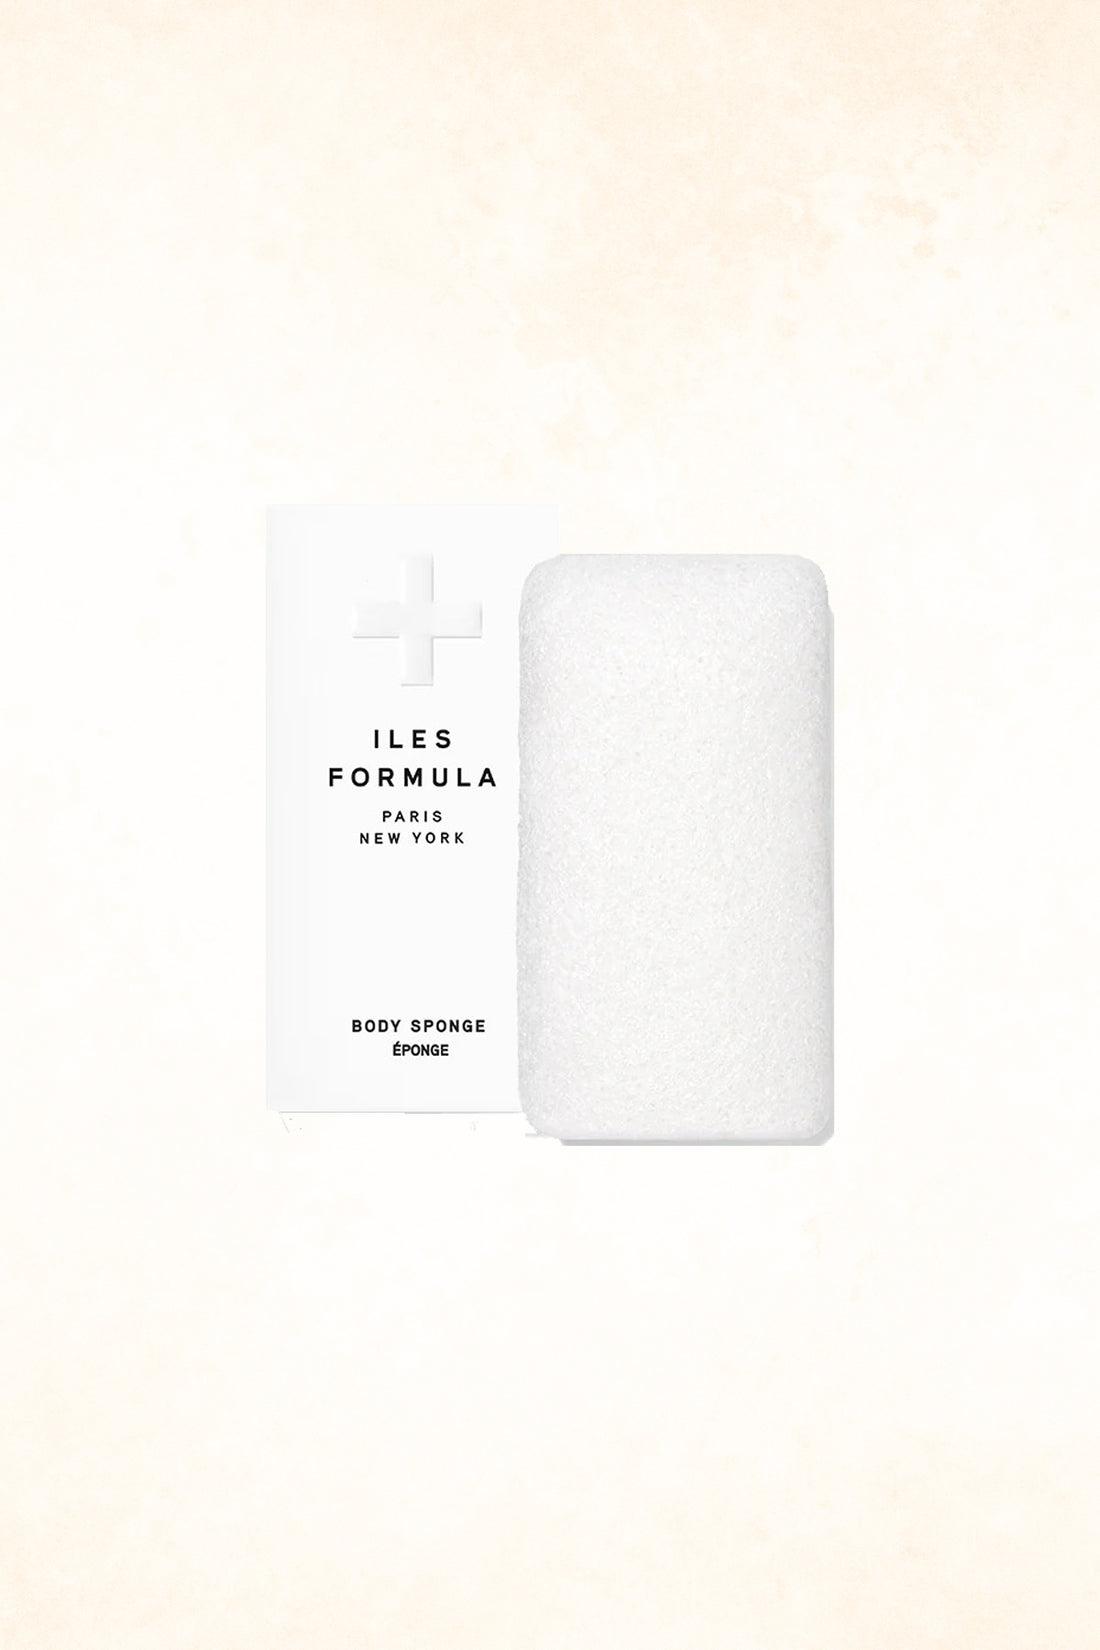 Iles Formula – Body Sponge